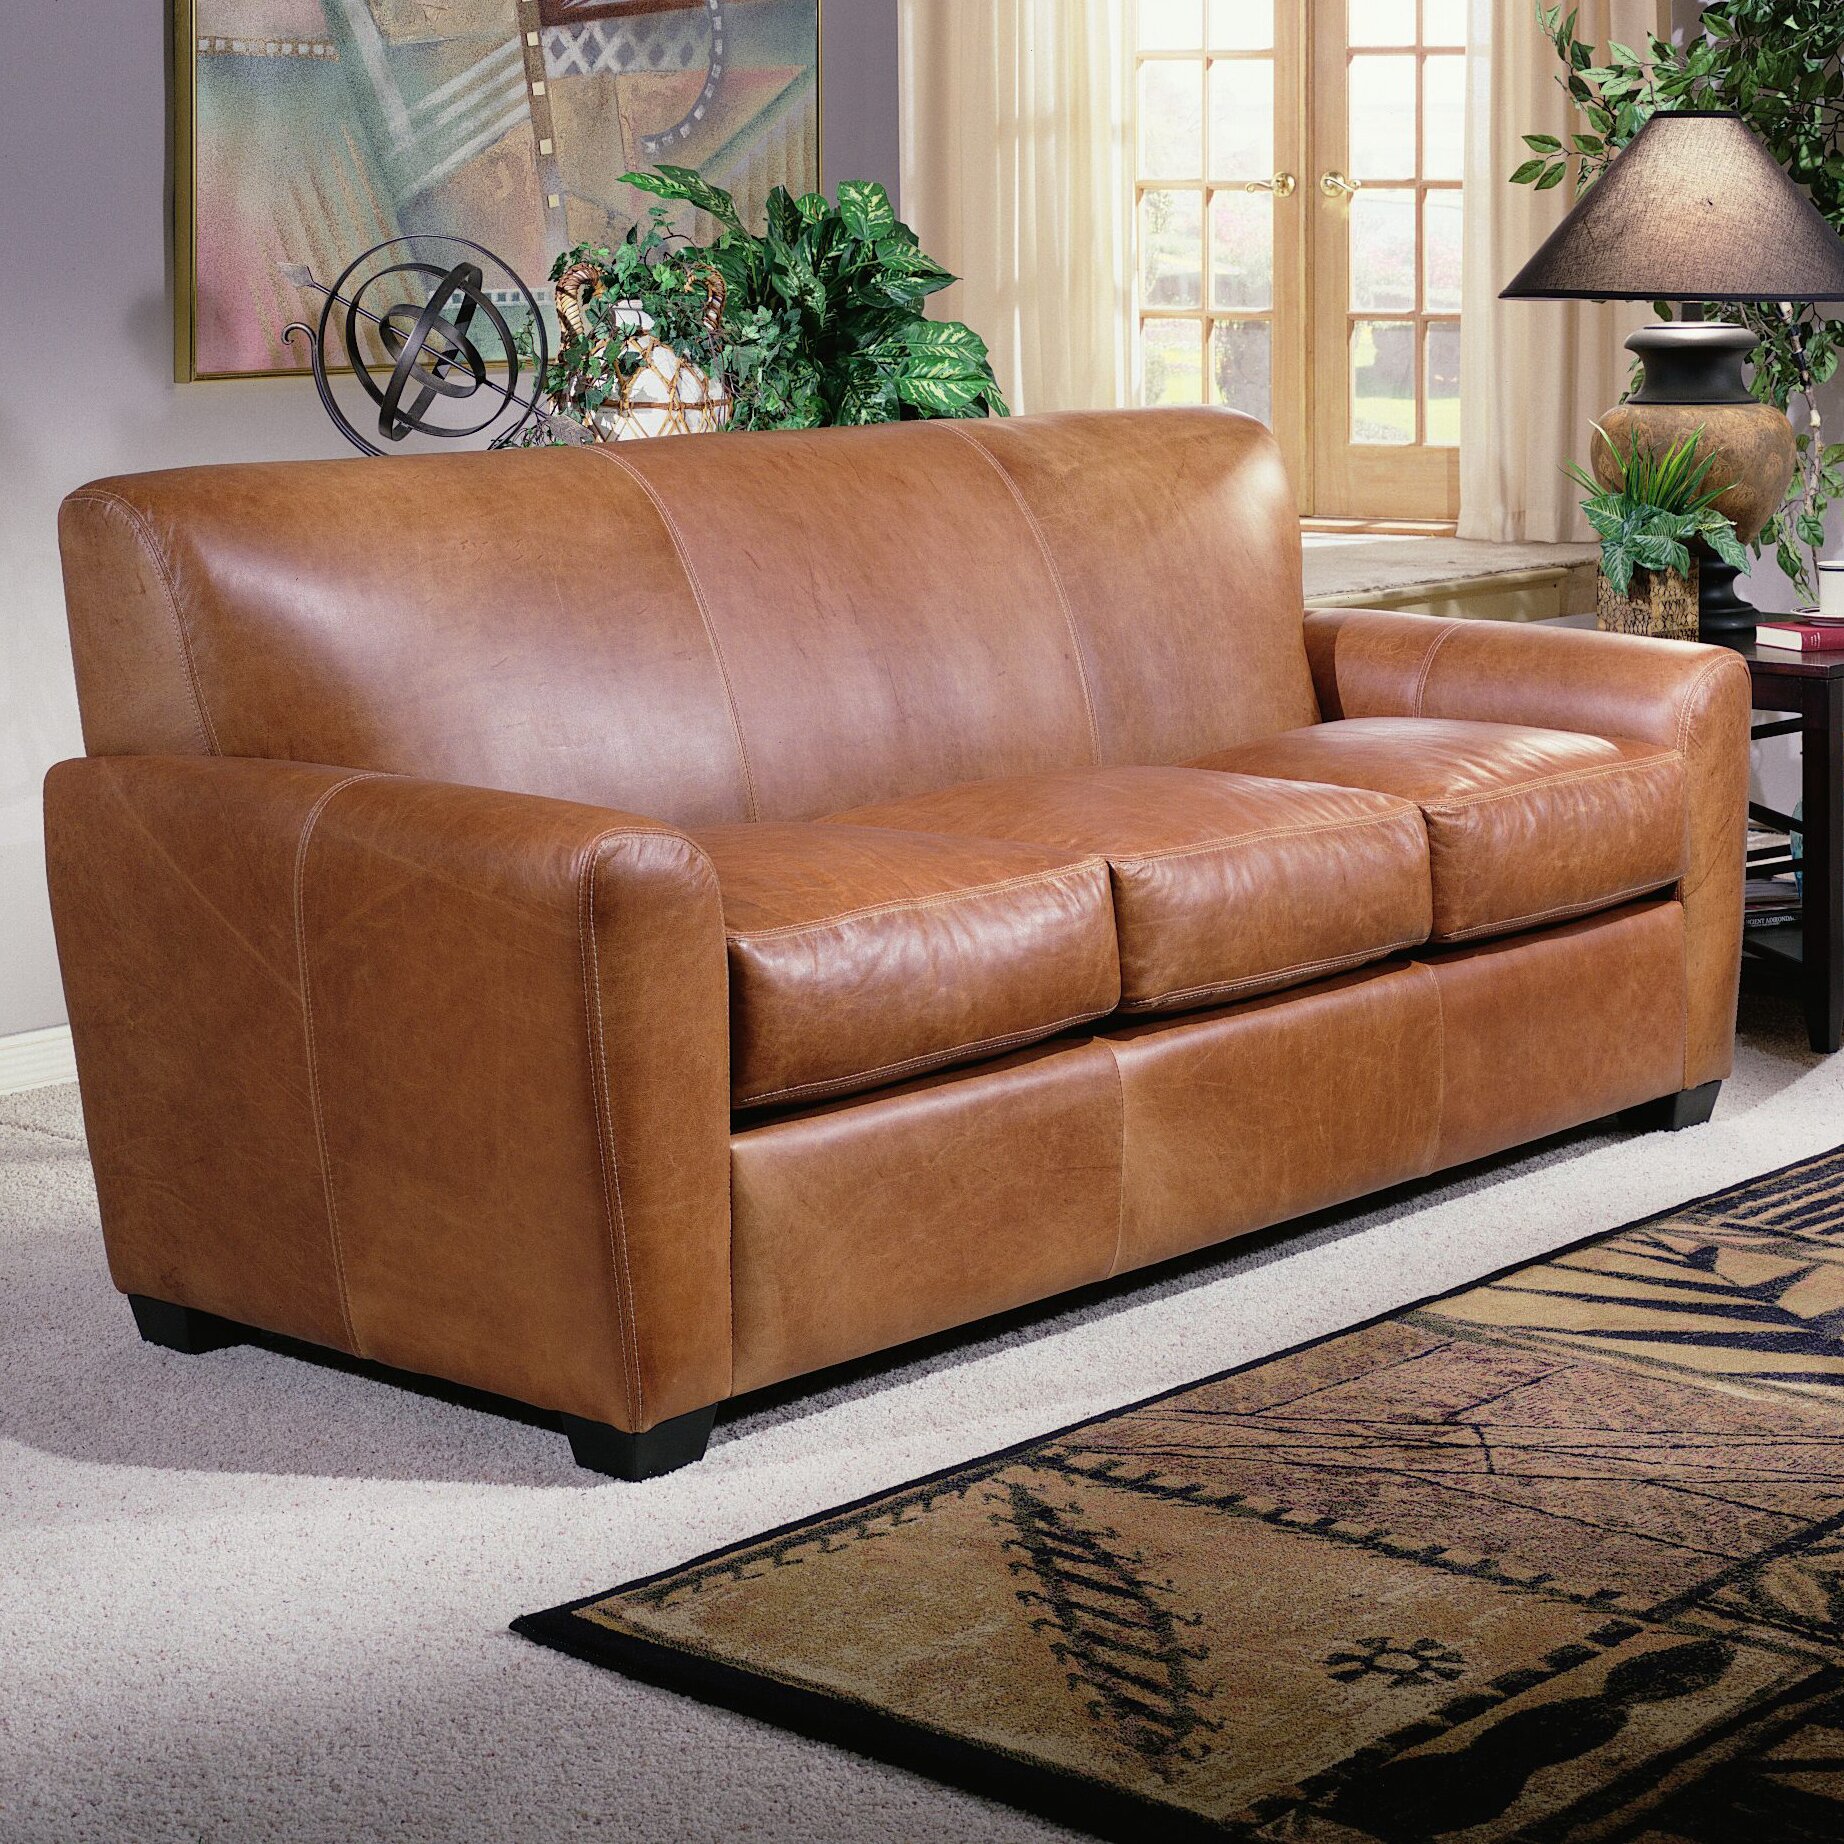 Omnia Leather Jackson Leather Sleeper Sofa & Reviews | Wayfair